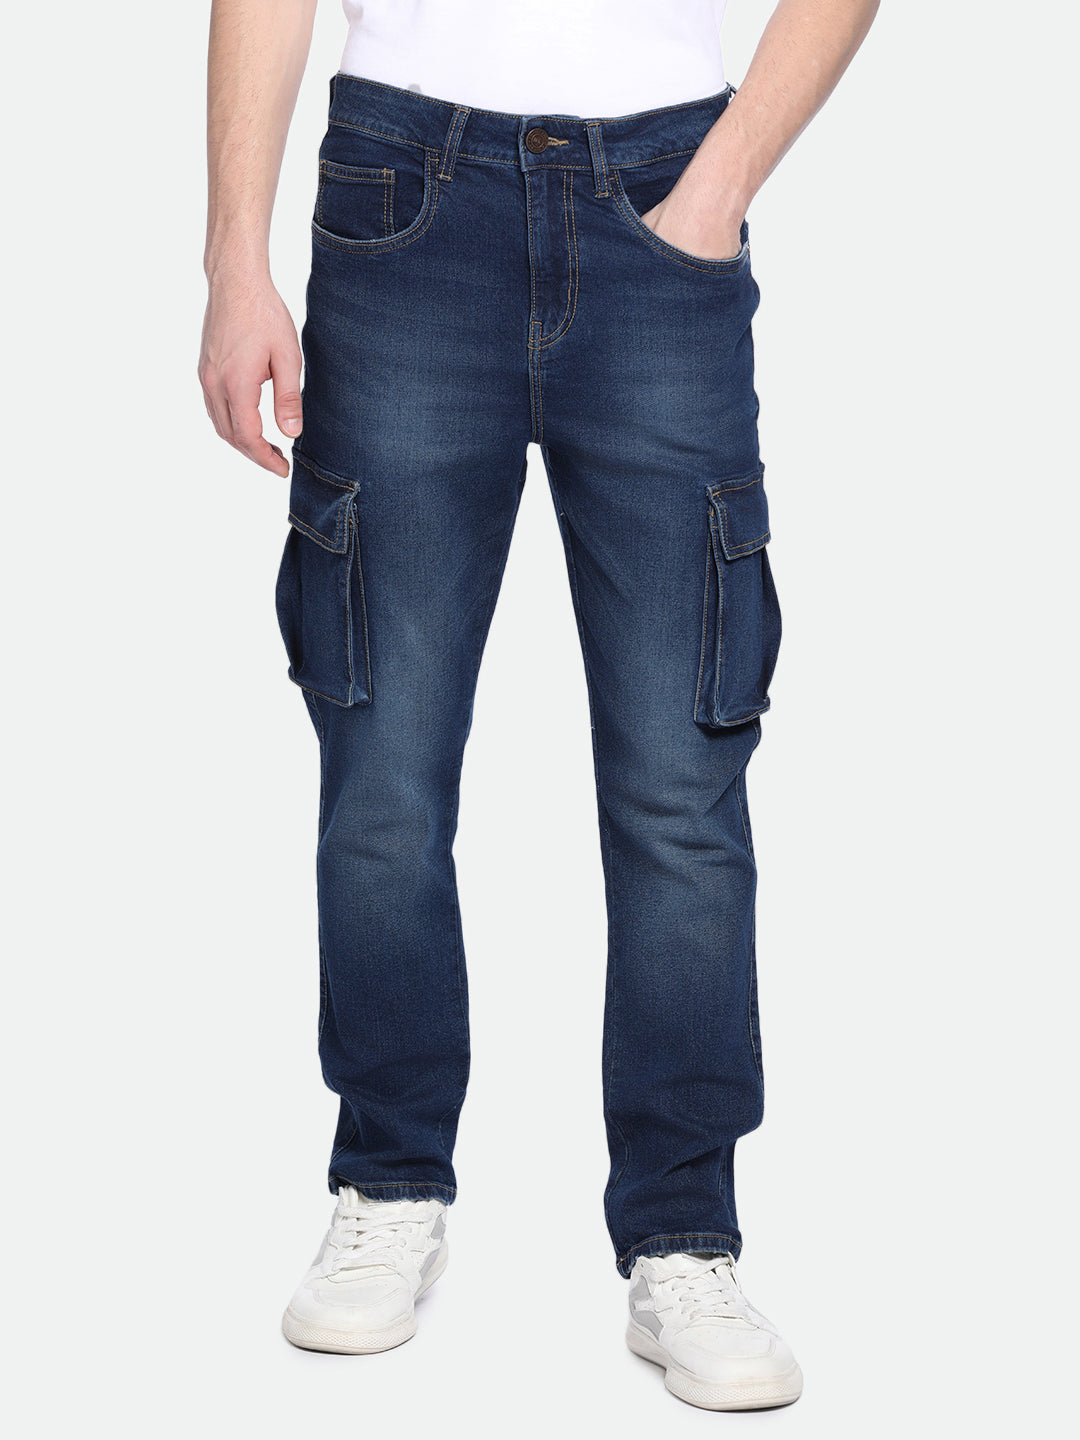 Dennis Lingo Mens's Dark Blue Solid Jeans